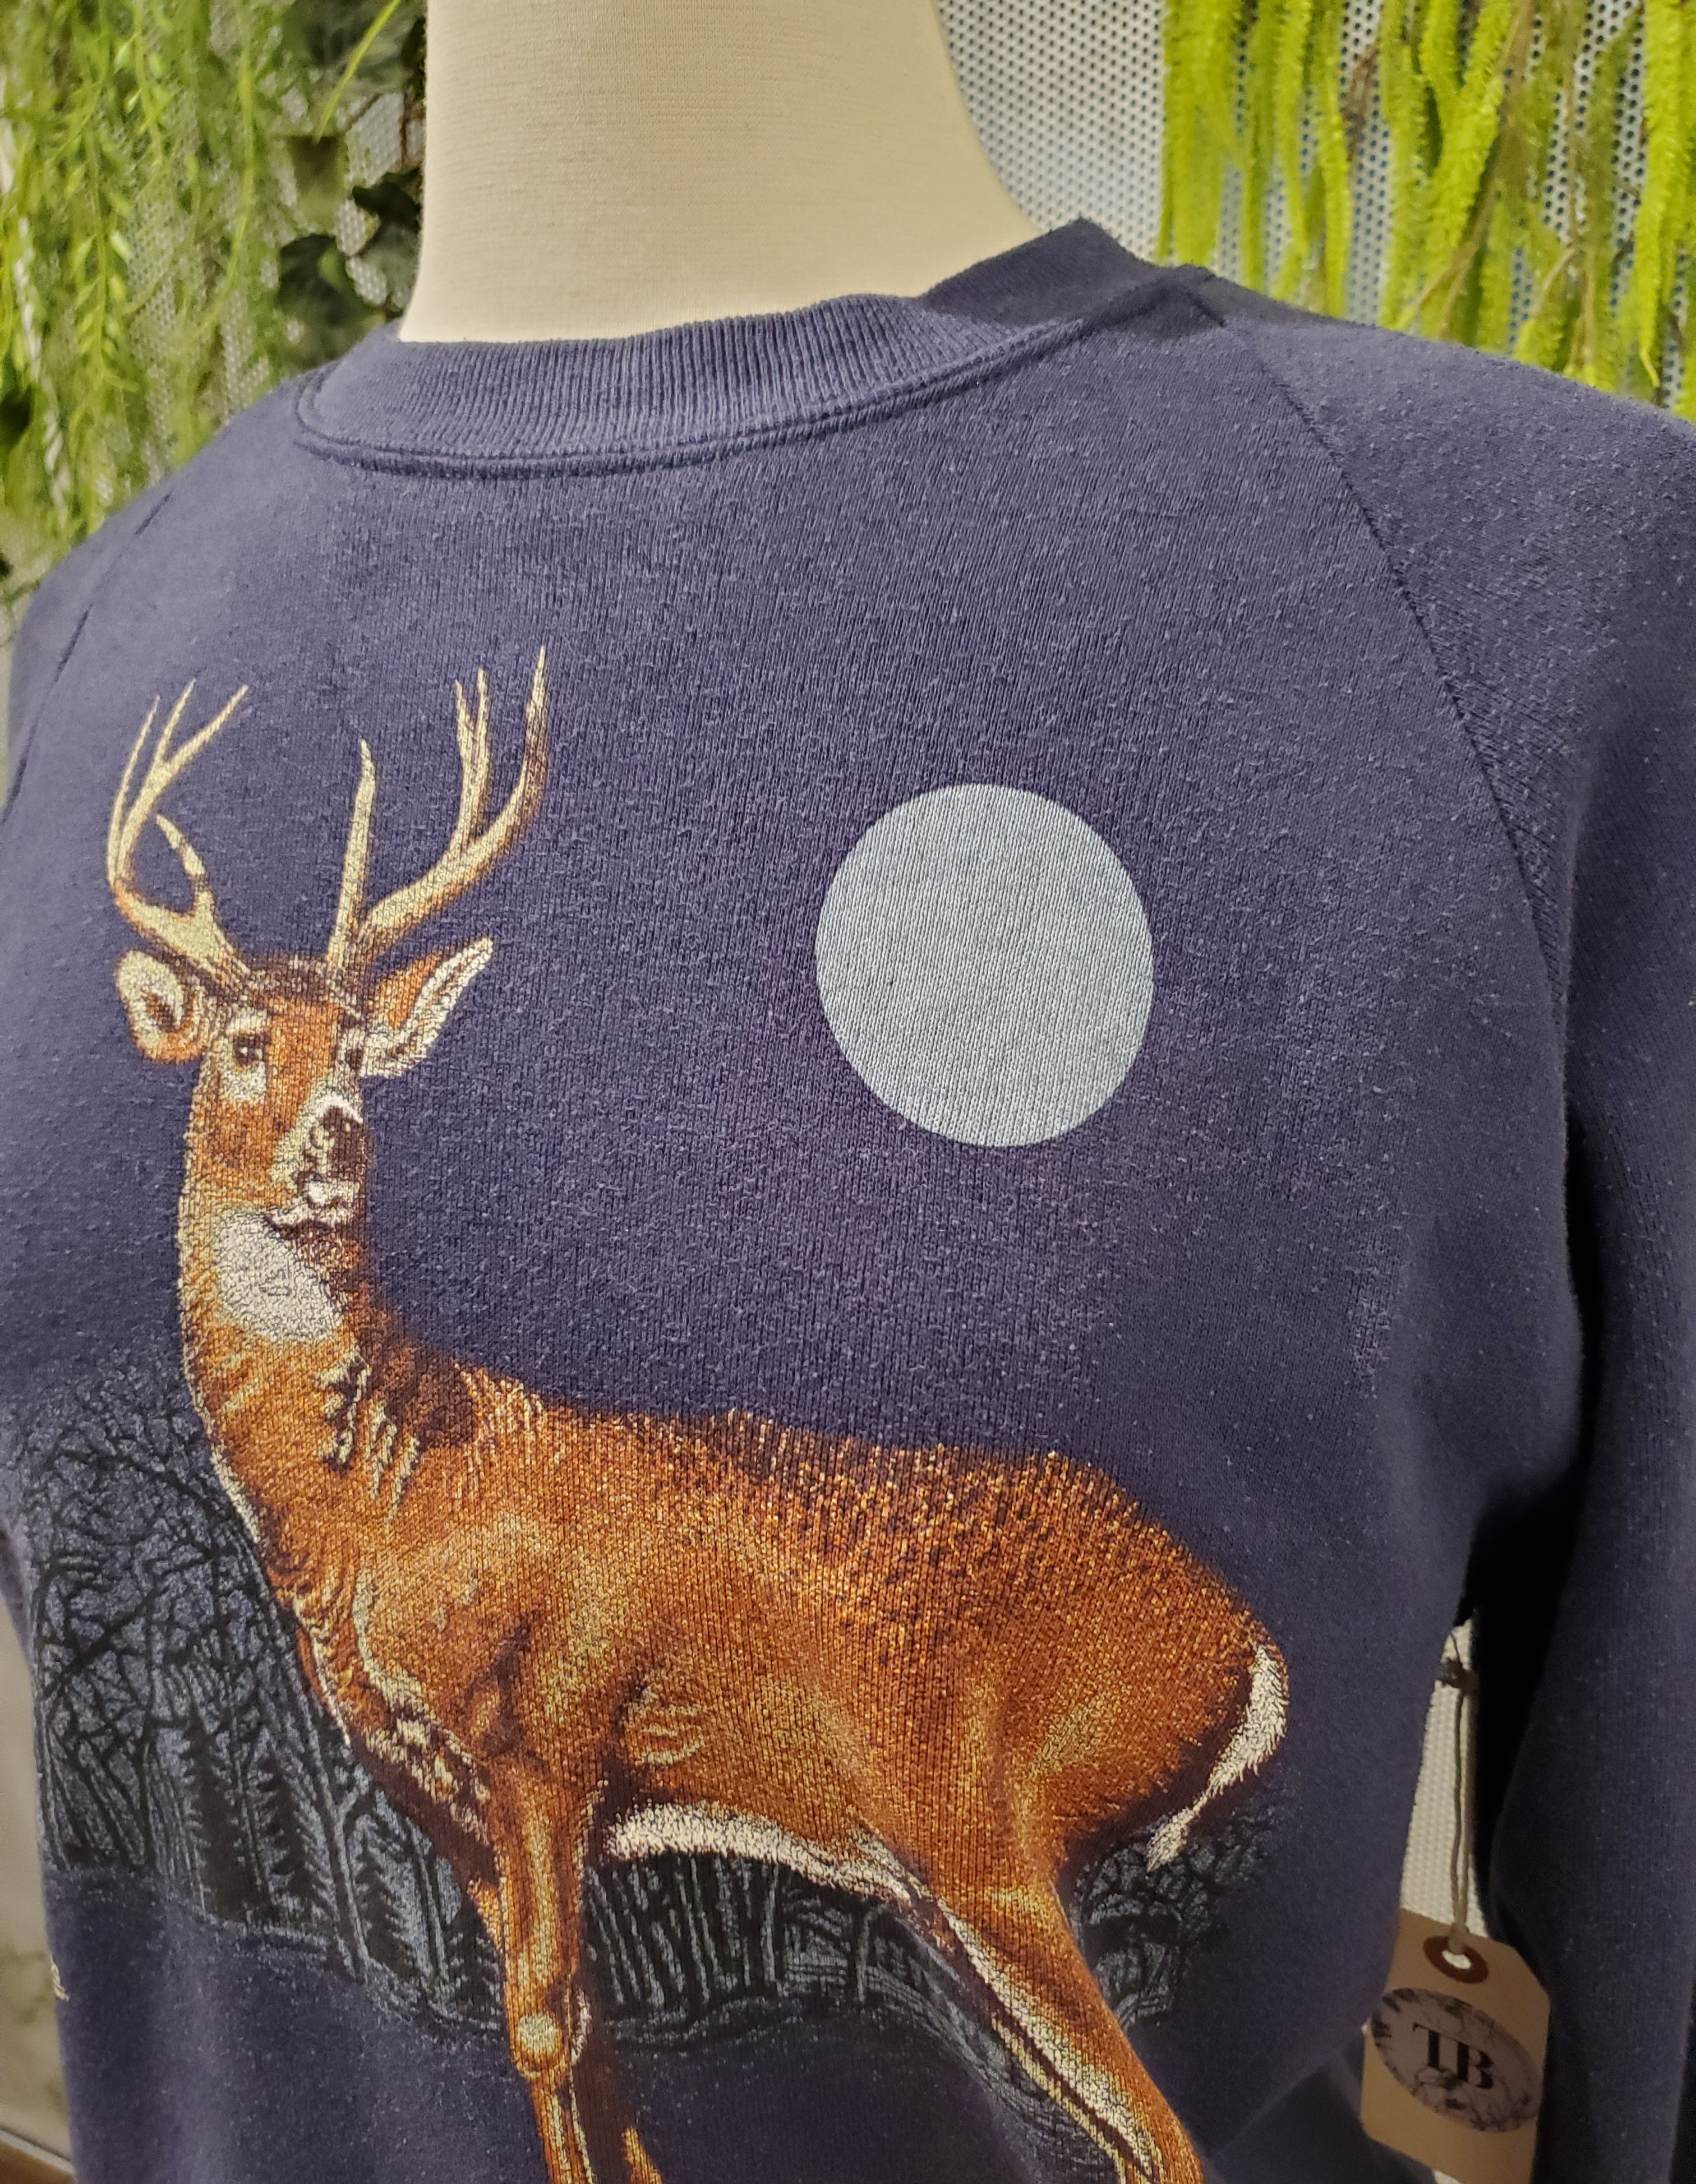 1987 Deer Themed Sweatshirt